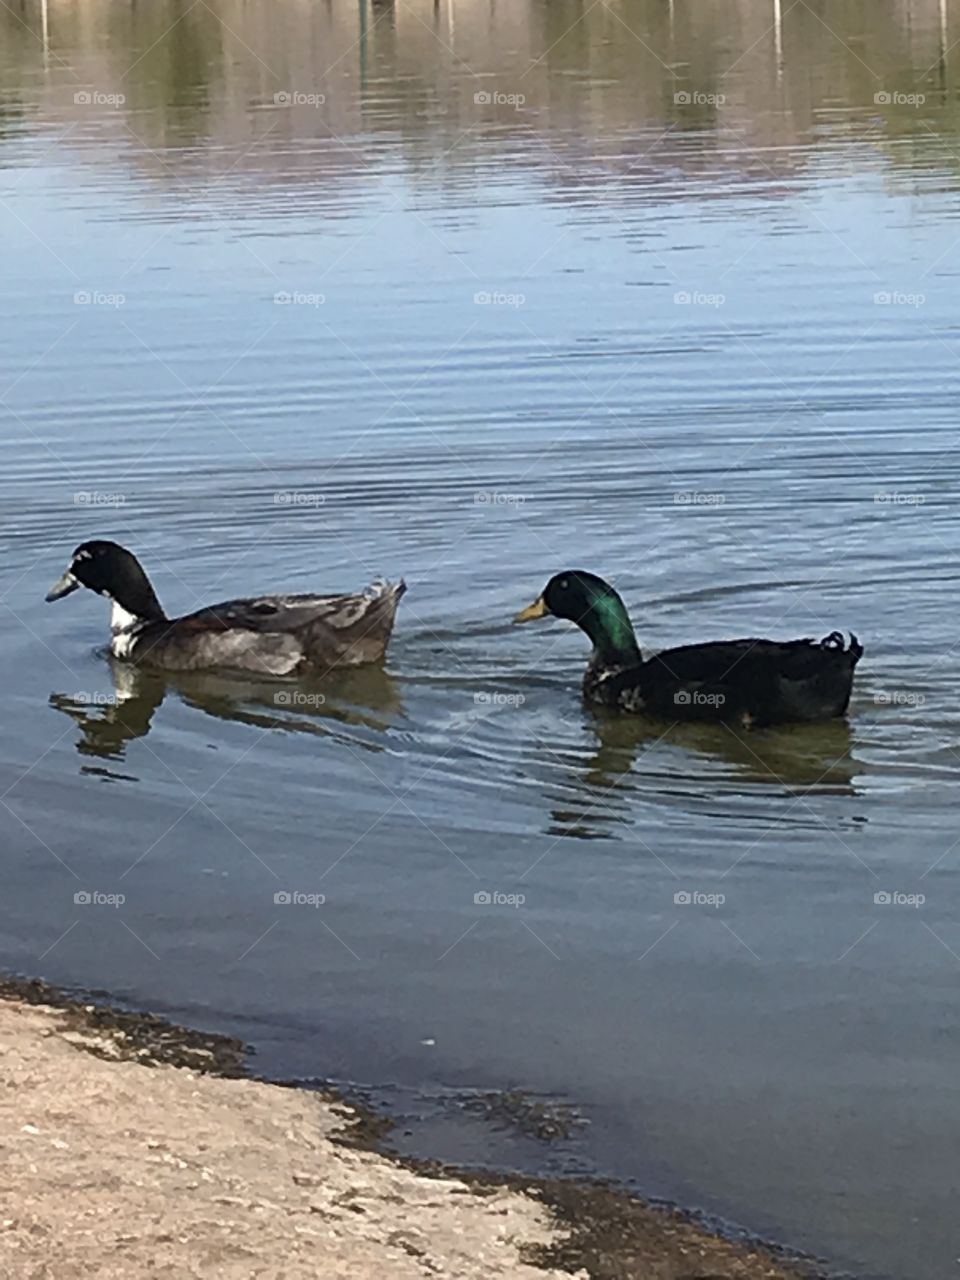 My friends the ducks